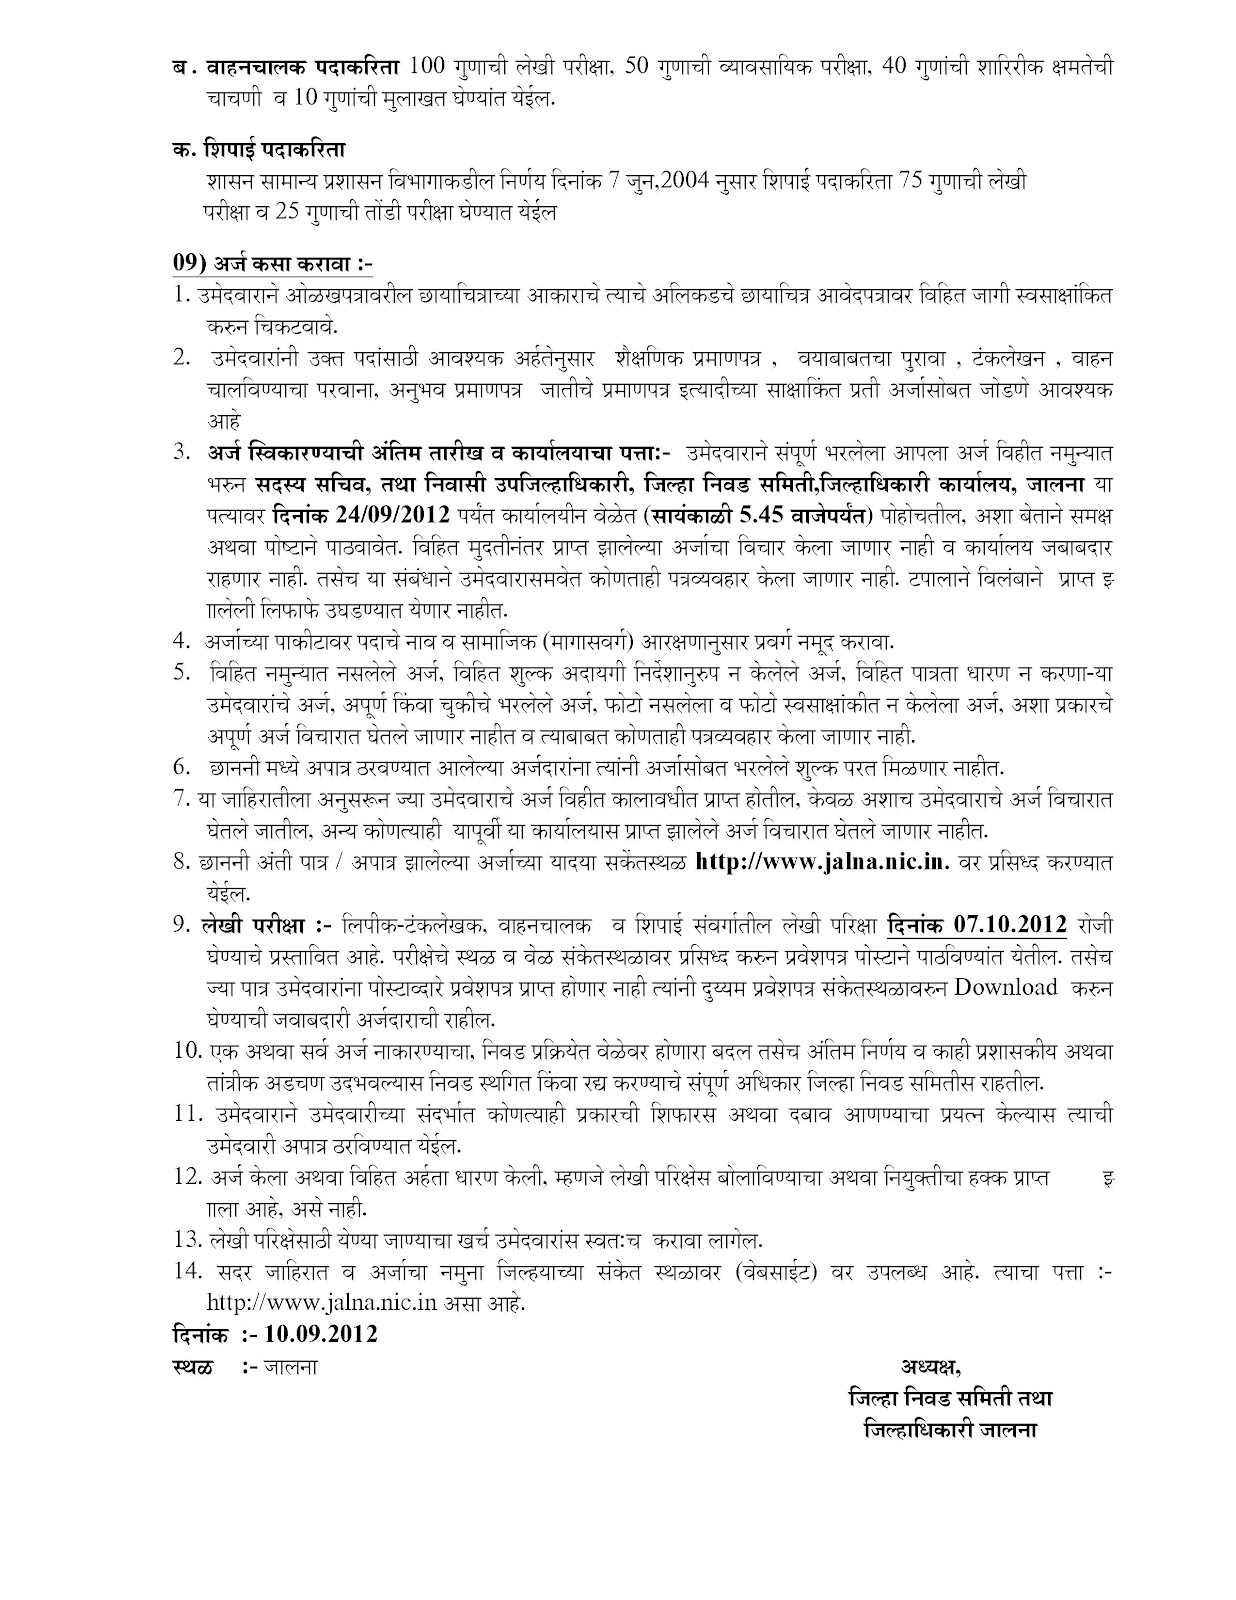 Collector Office Nagpur Talathi Recruitment